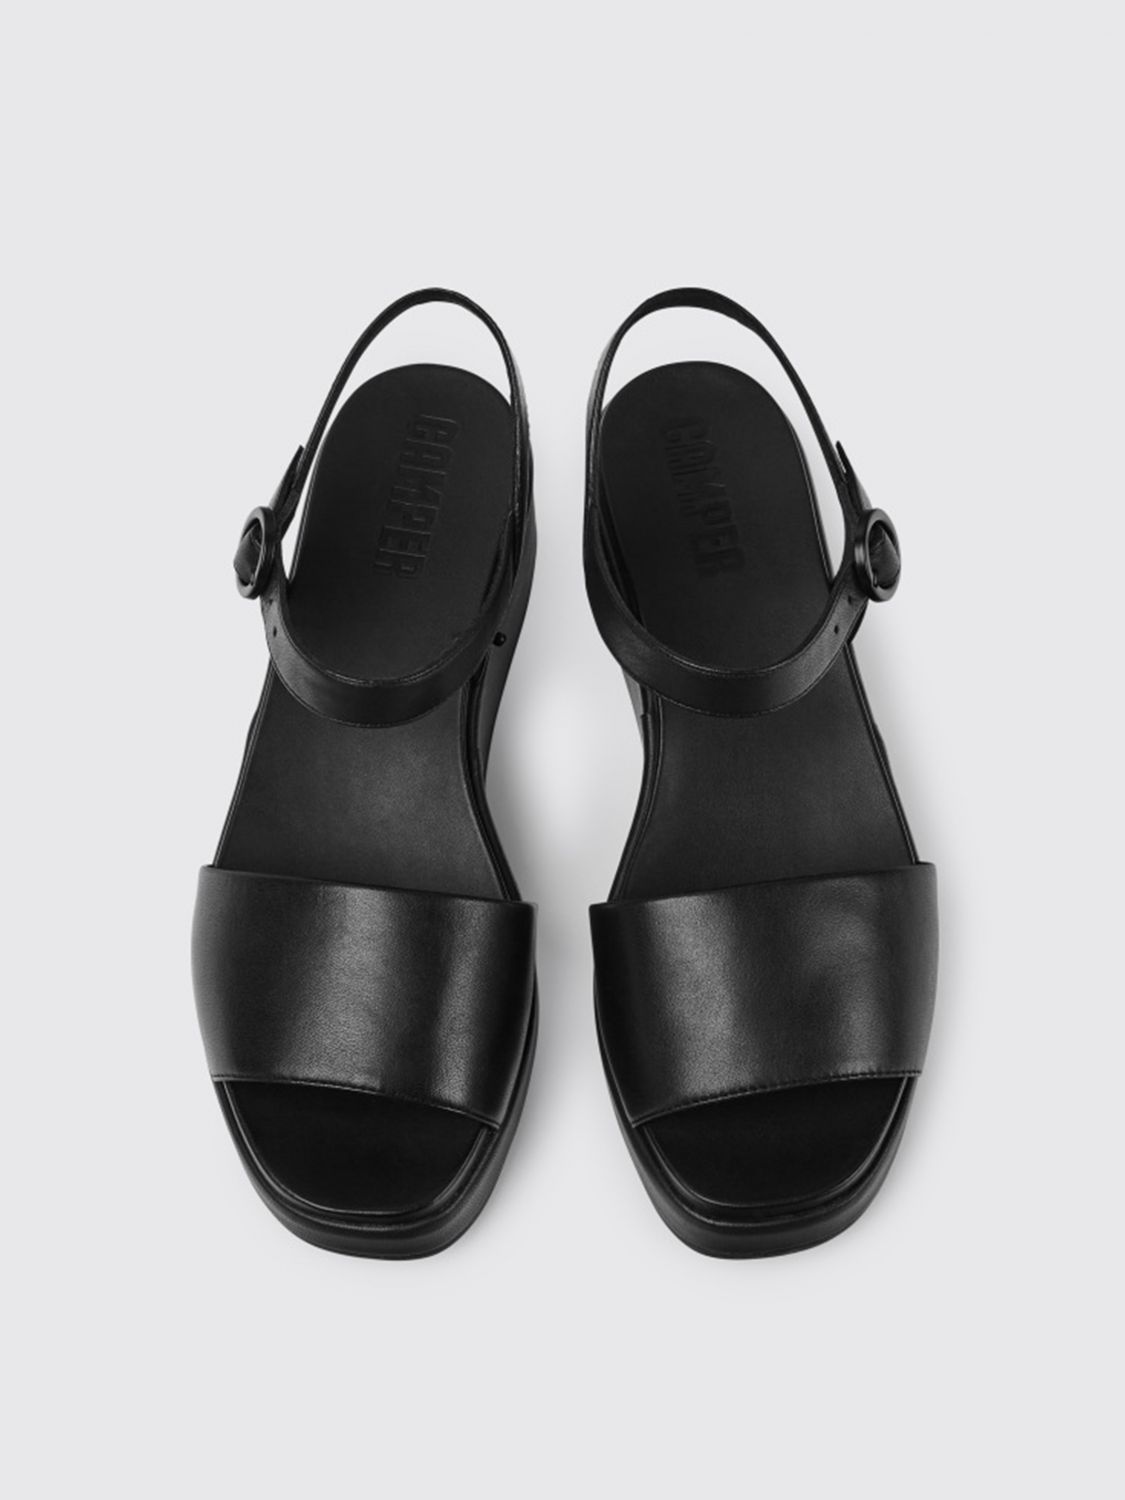 Chaussures compensées Camper: Sandales plates femme Camper noir 4